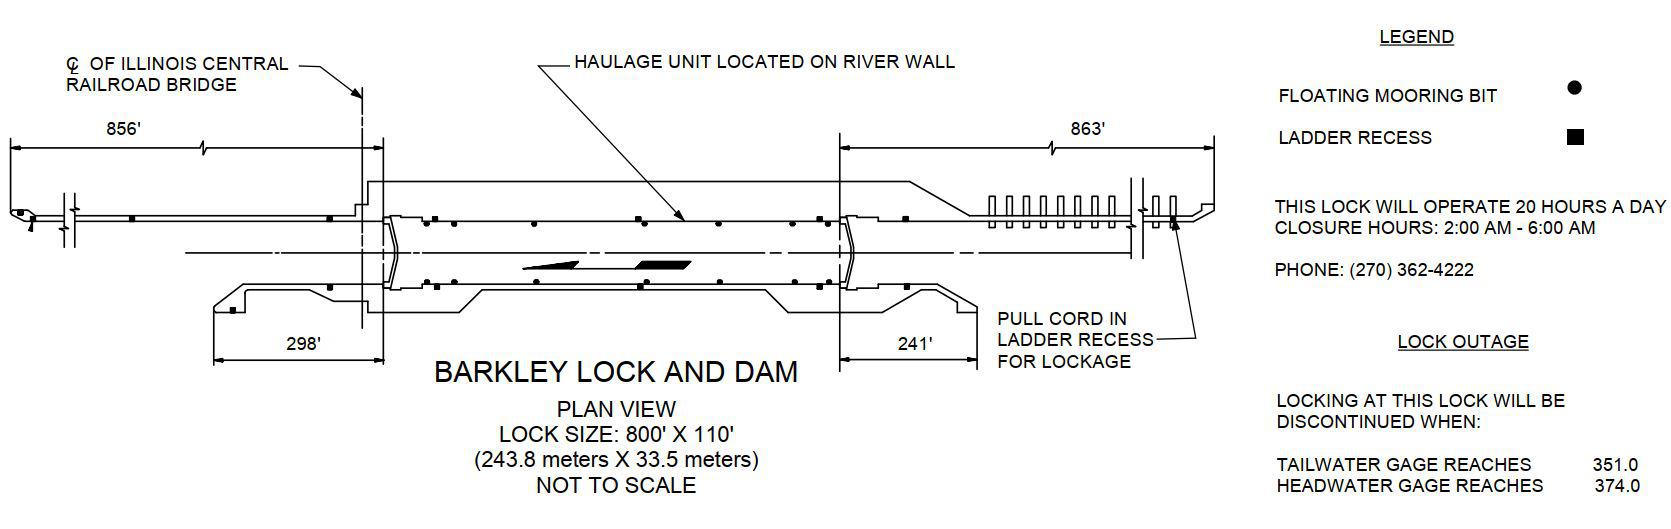 Barkley Lock and Dam Clearances | Bridge Calculator LLC